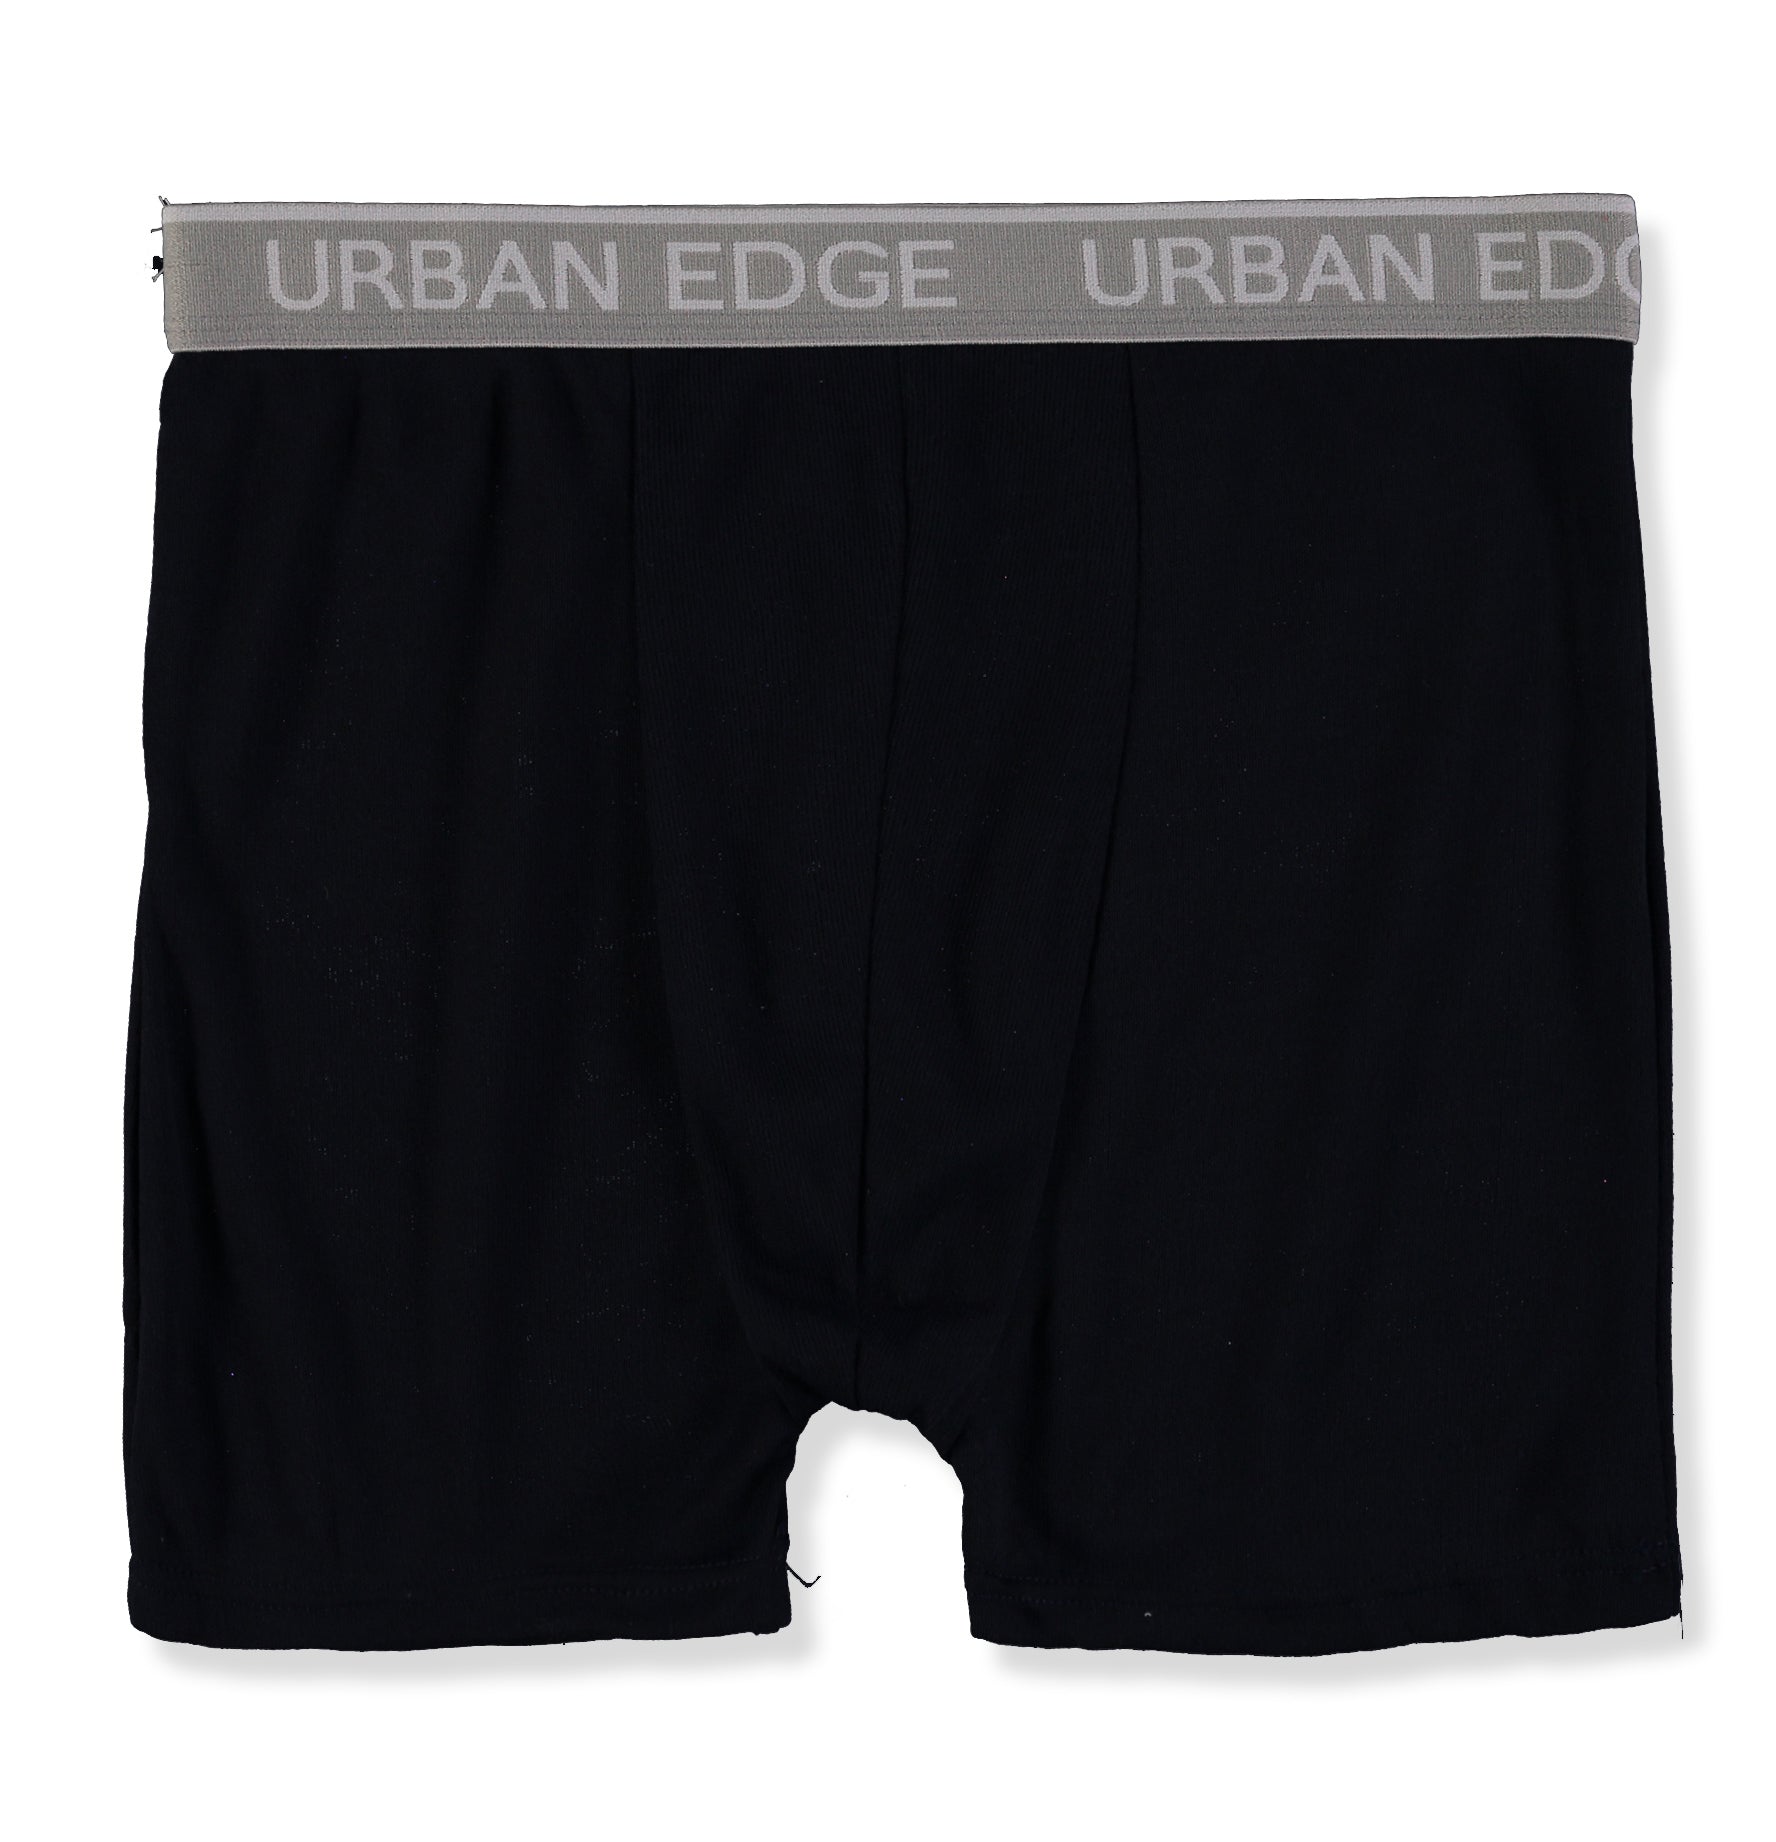 Men's Solid & Striped Urban Edge Boxer Briefs - Sizes Small -XL